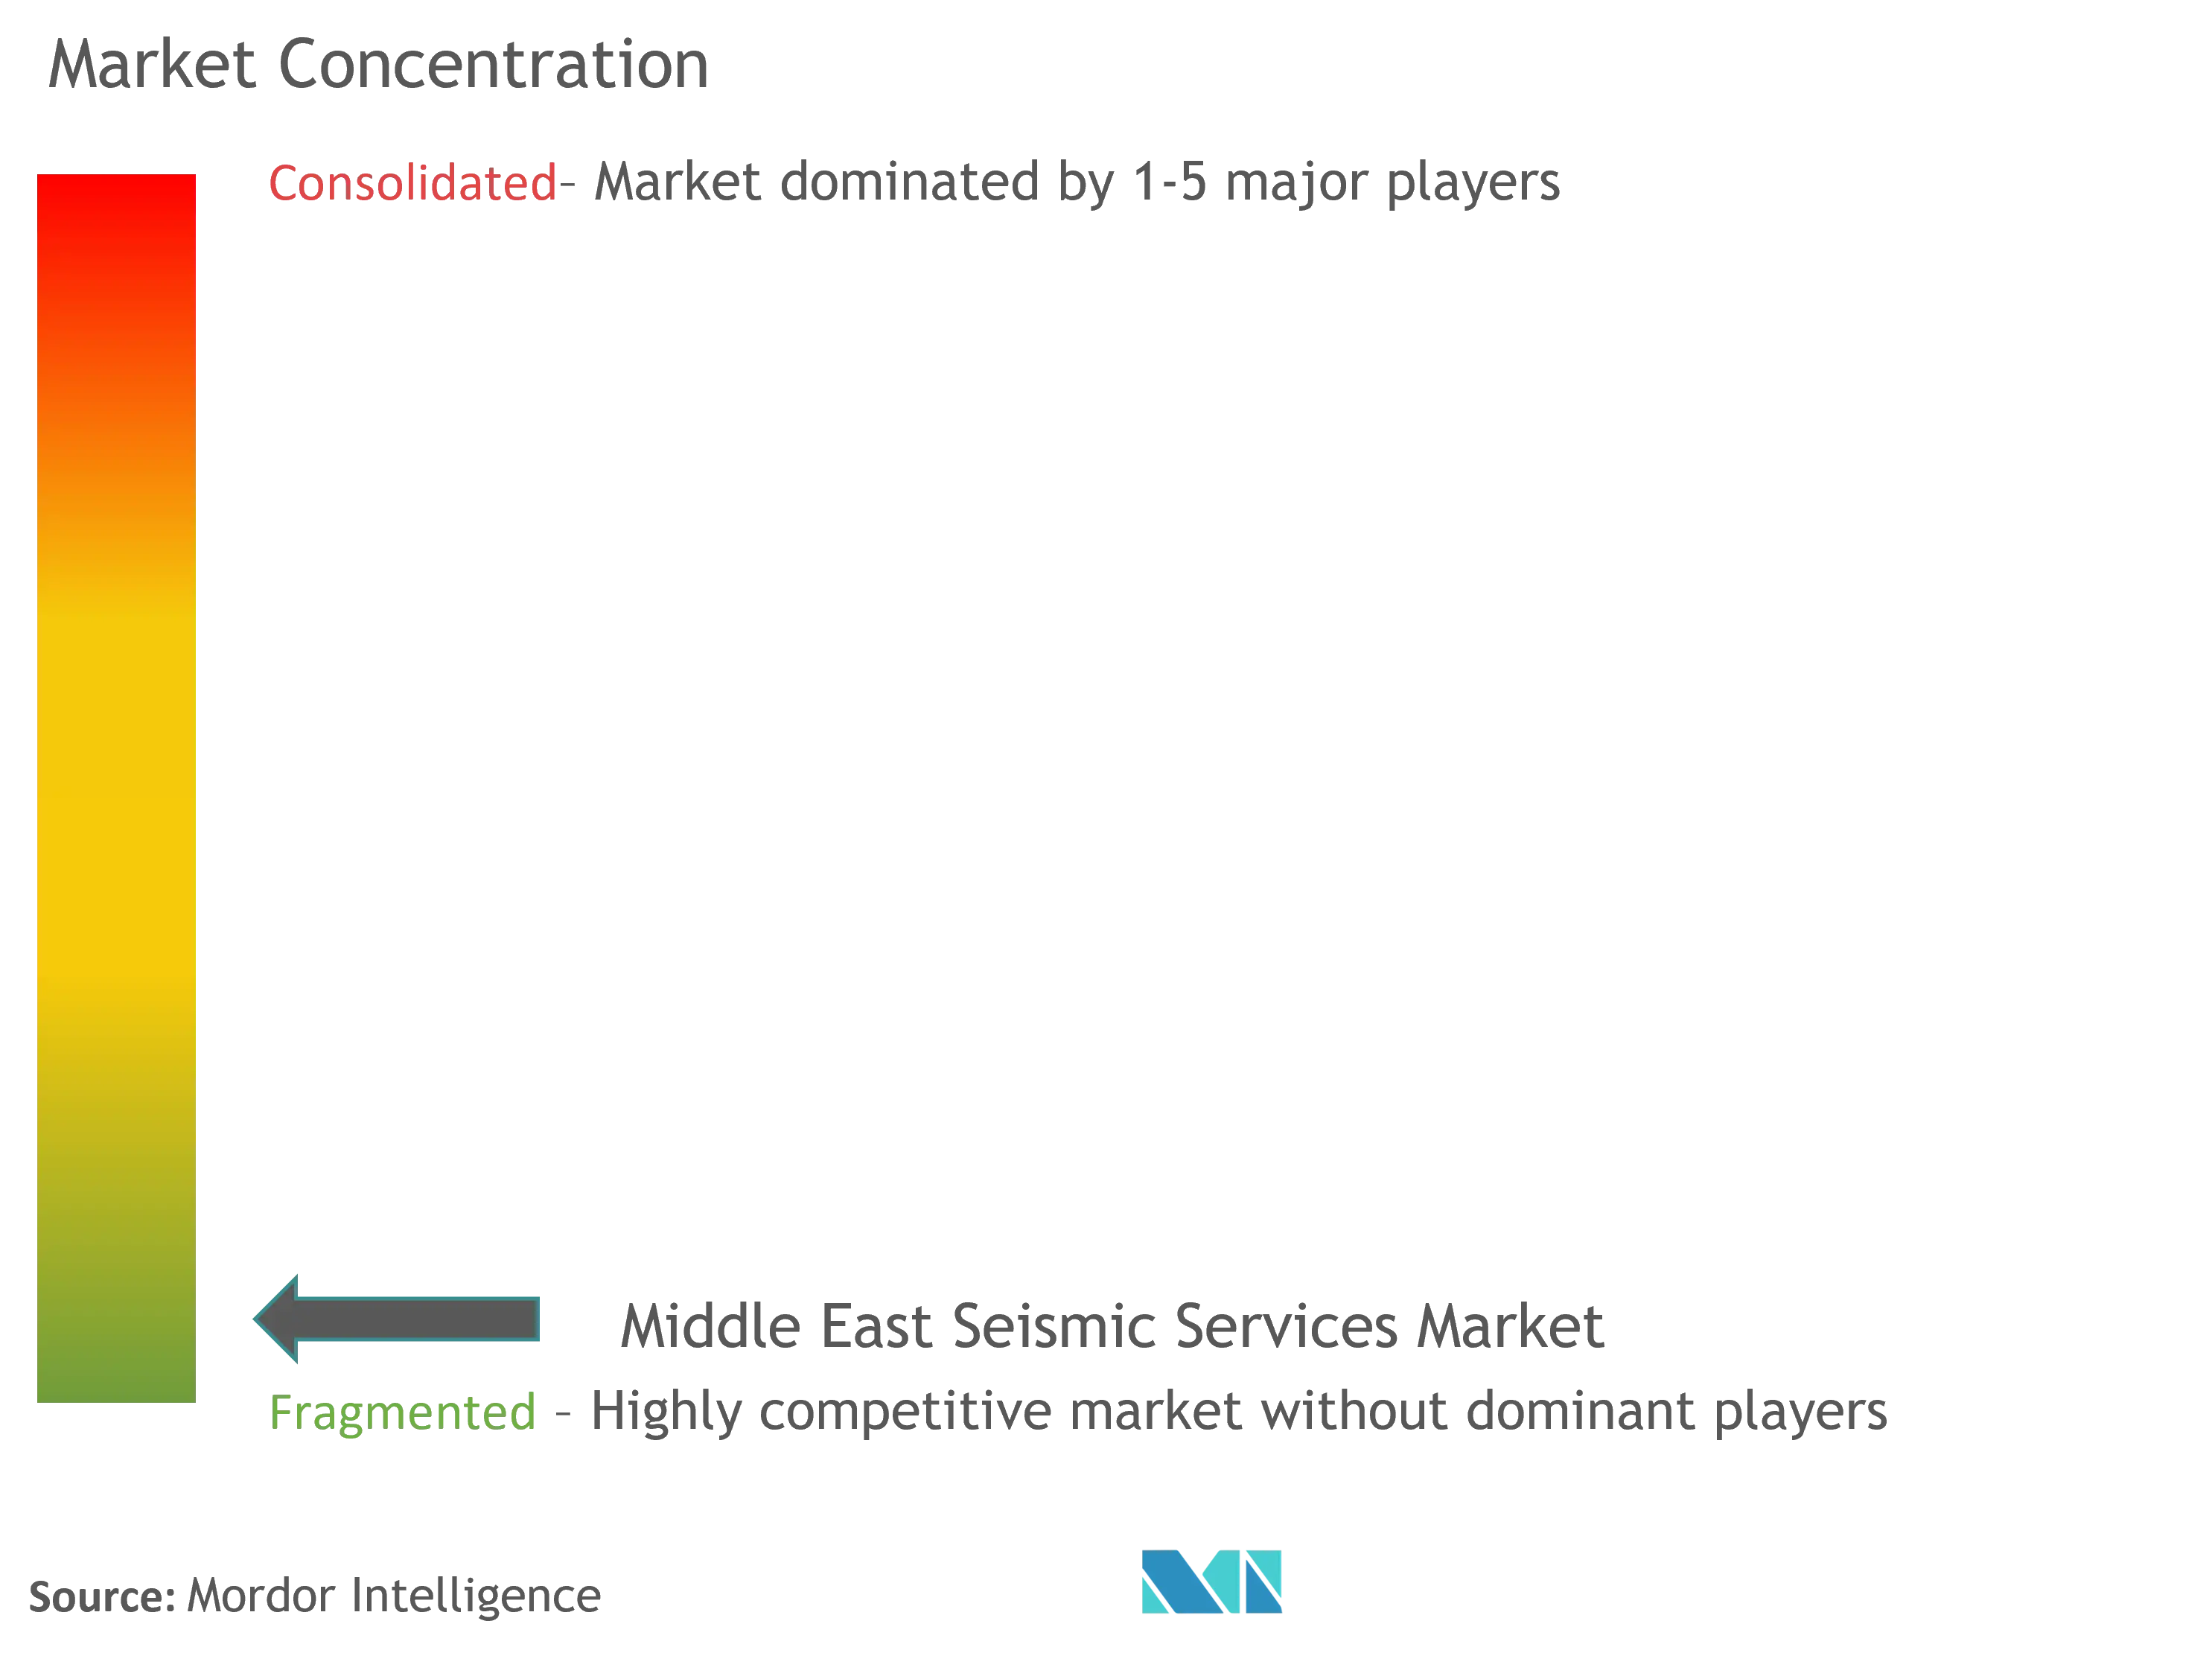 Market Concentration - Middle East Seismic Services.png